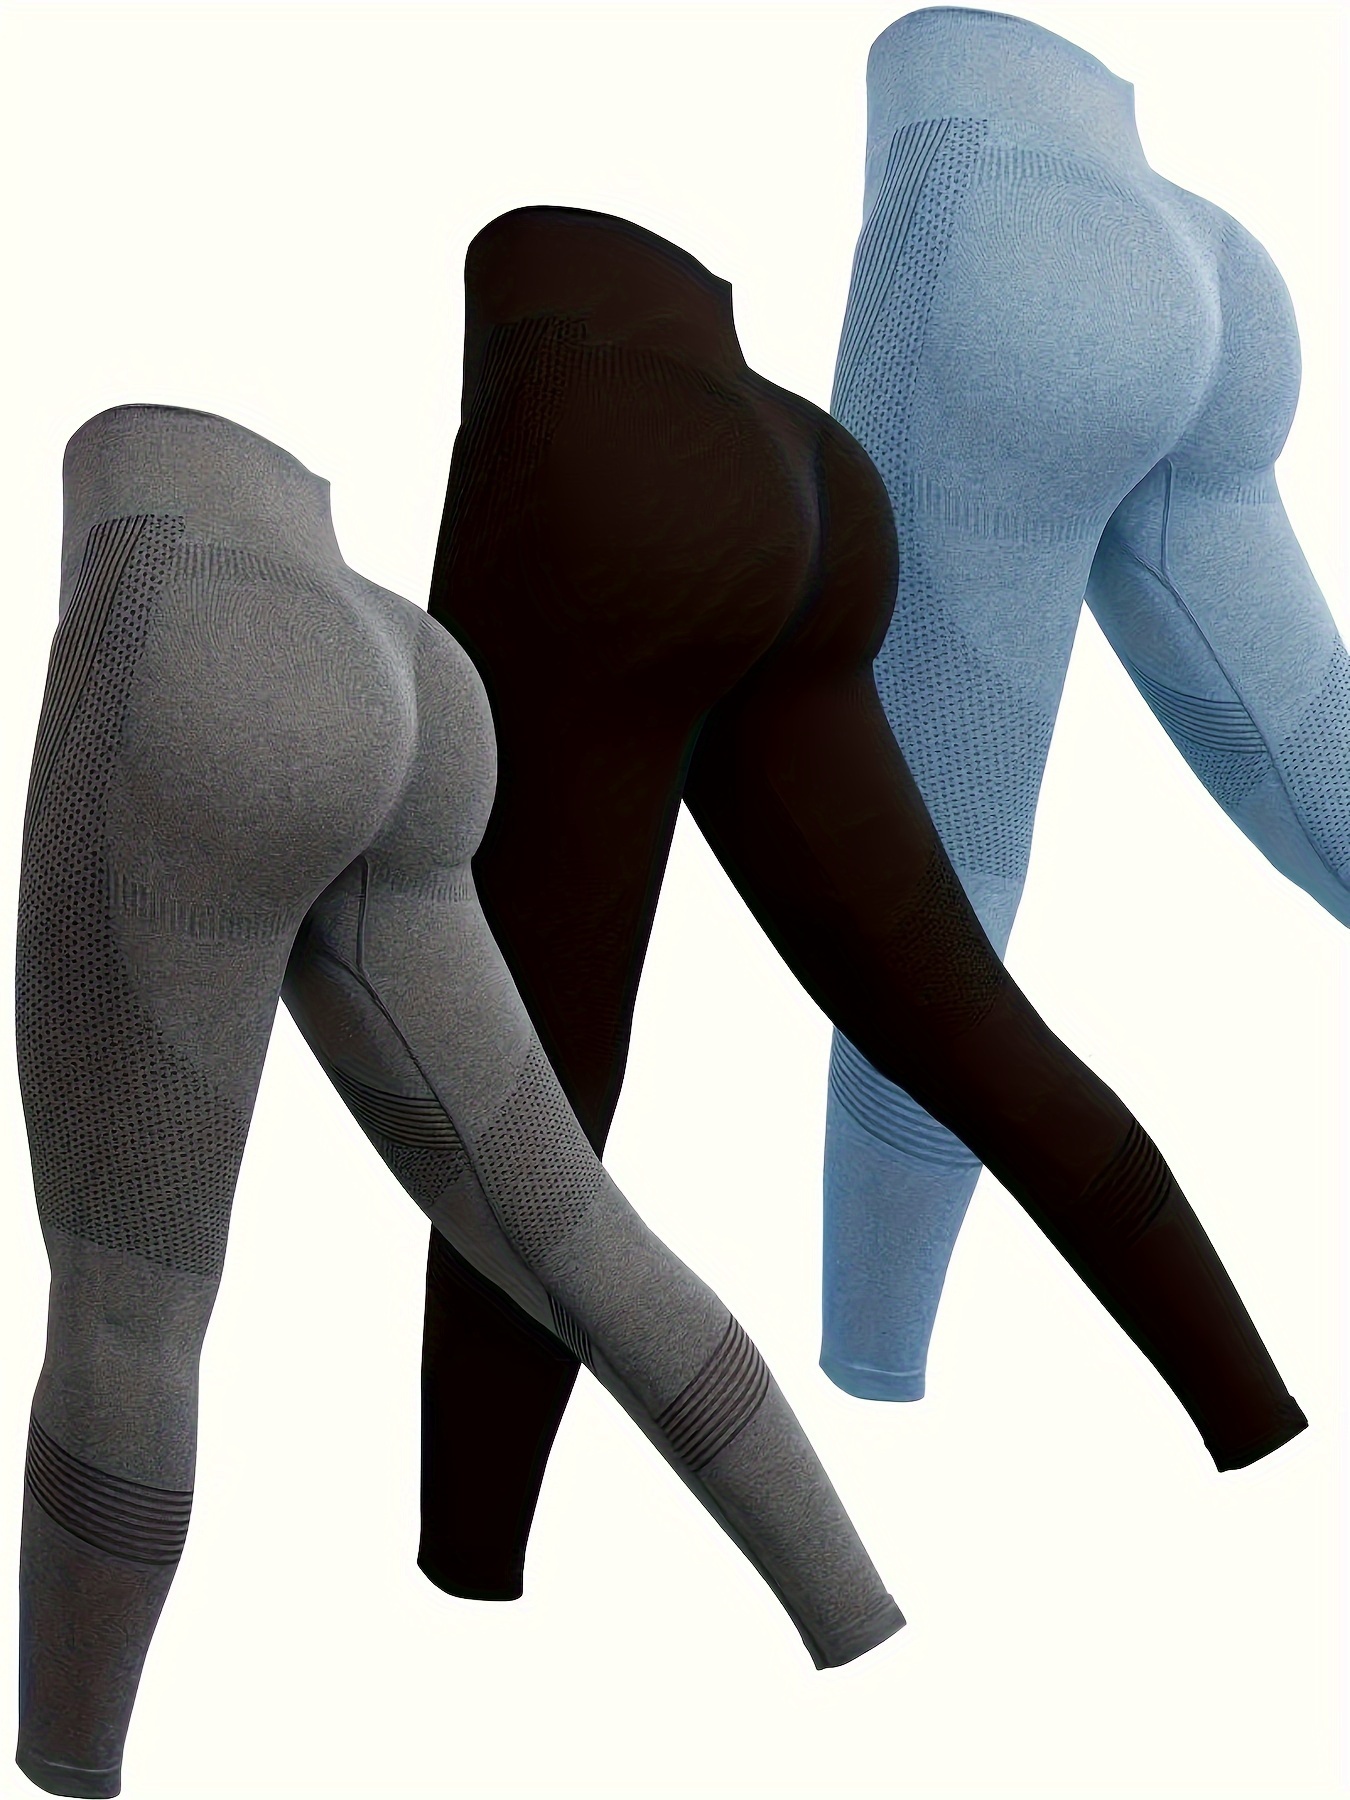 BLVB Yoga Pants for Women High Waisted Butt Lifting Workout Pants